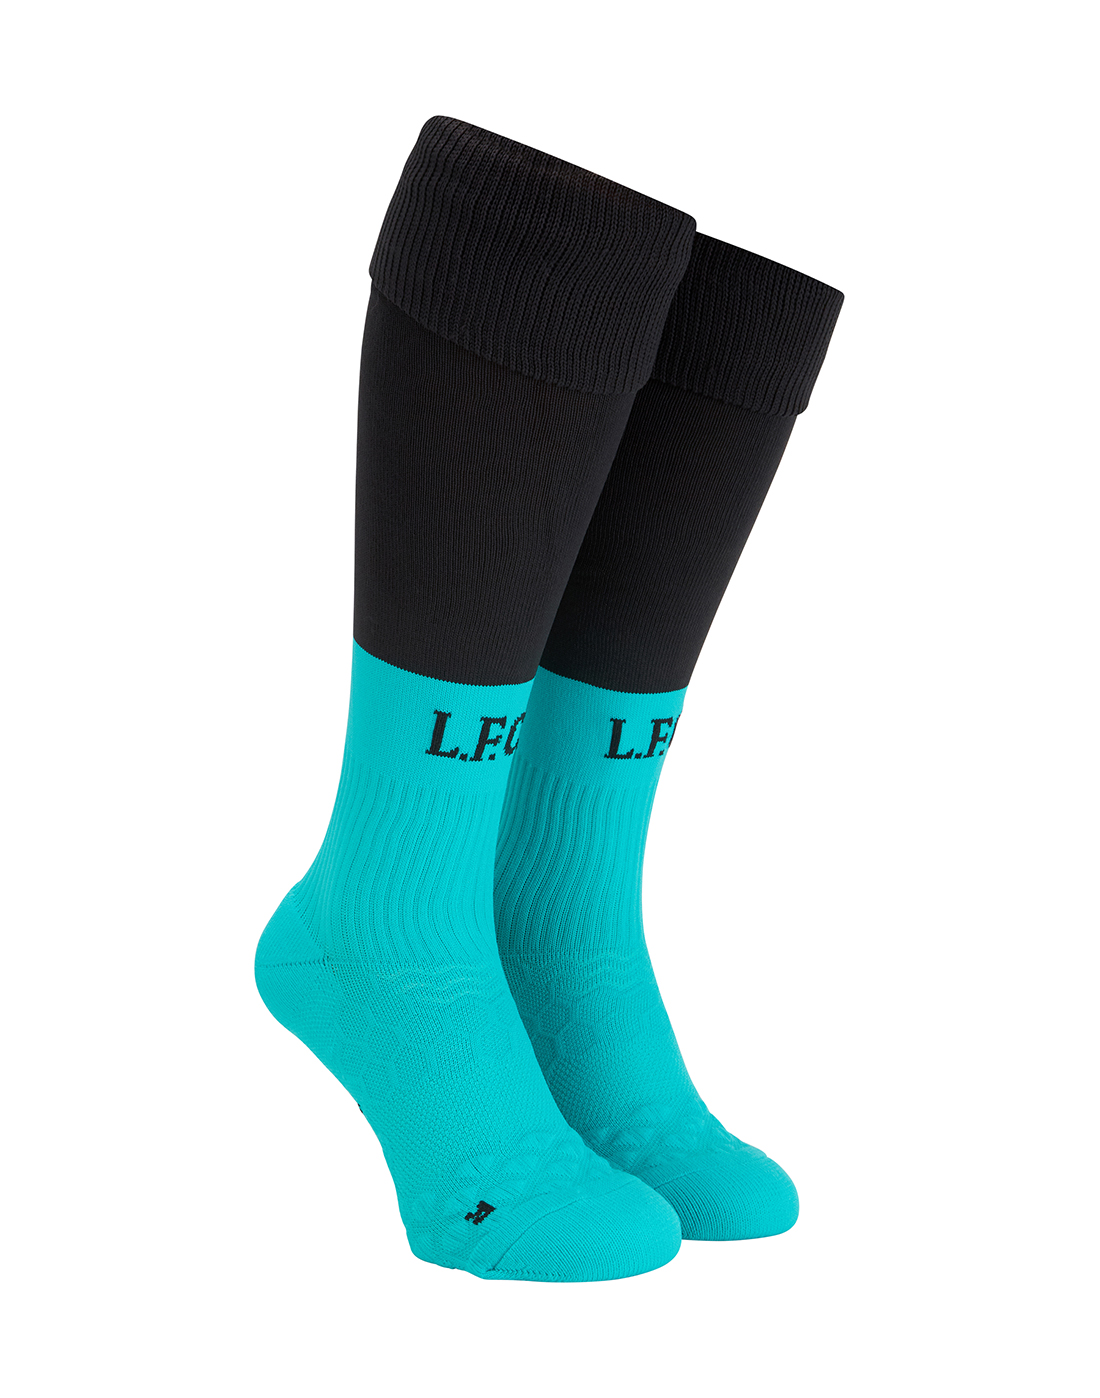 new balance liverpool socks